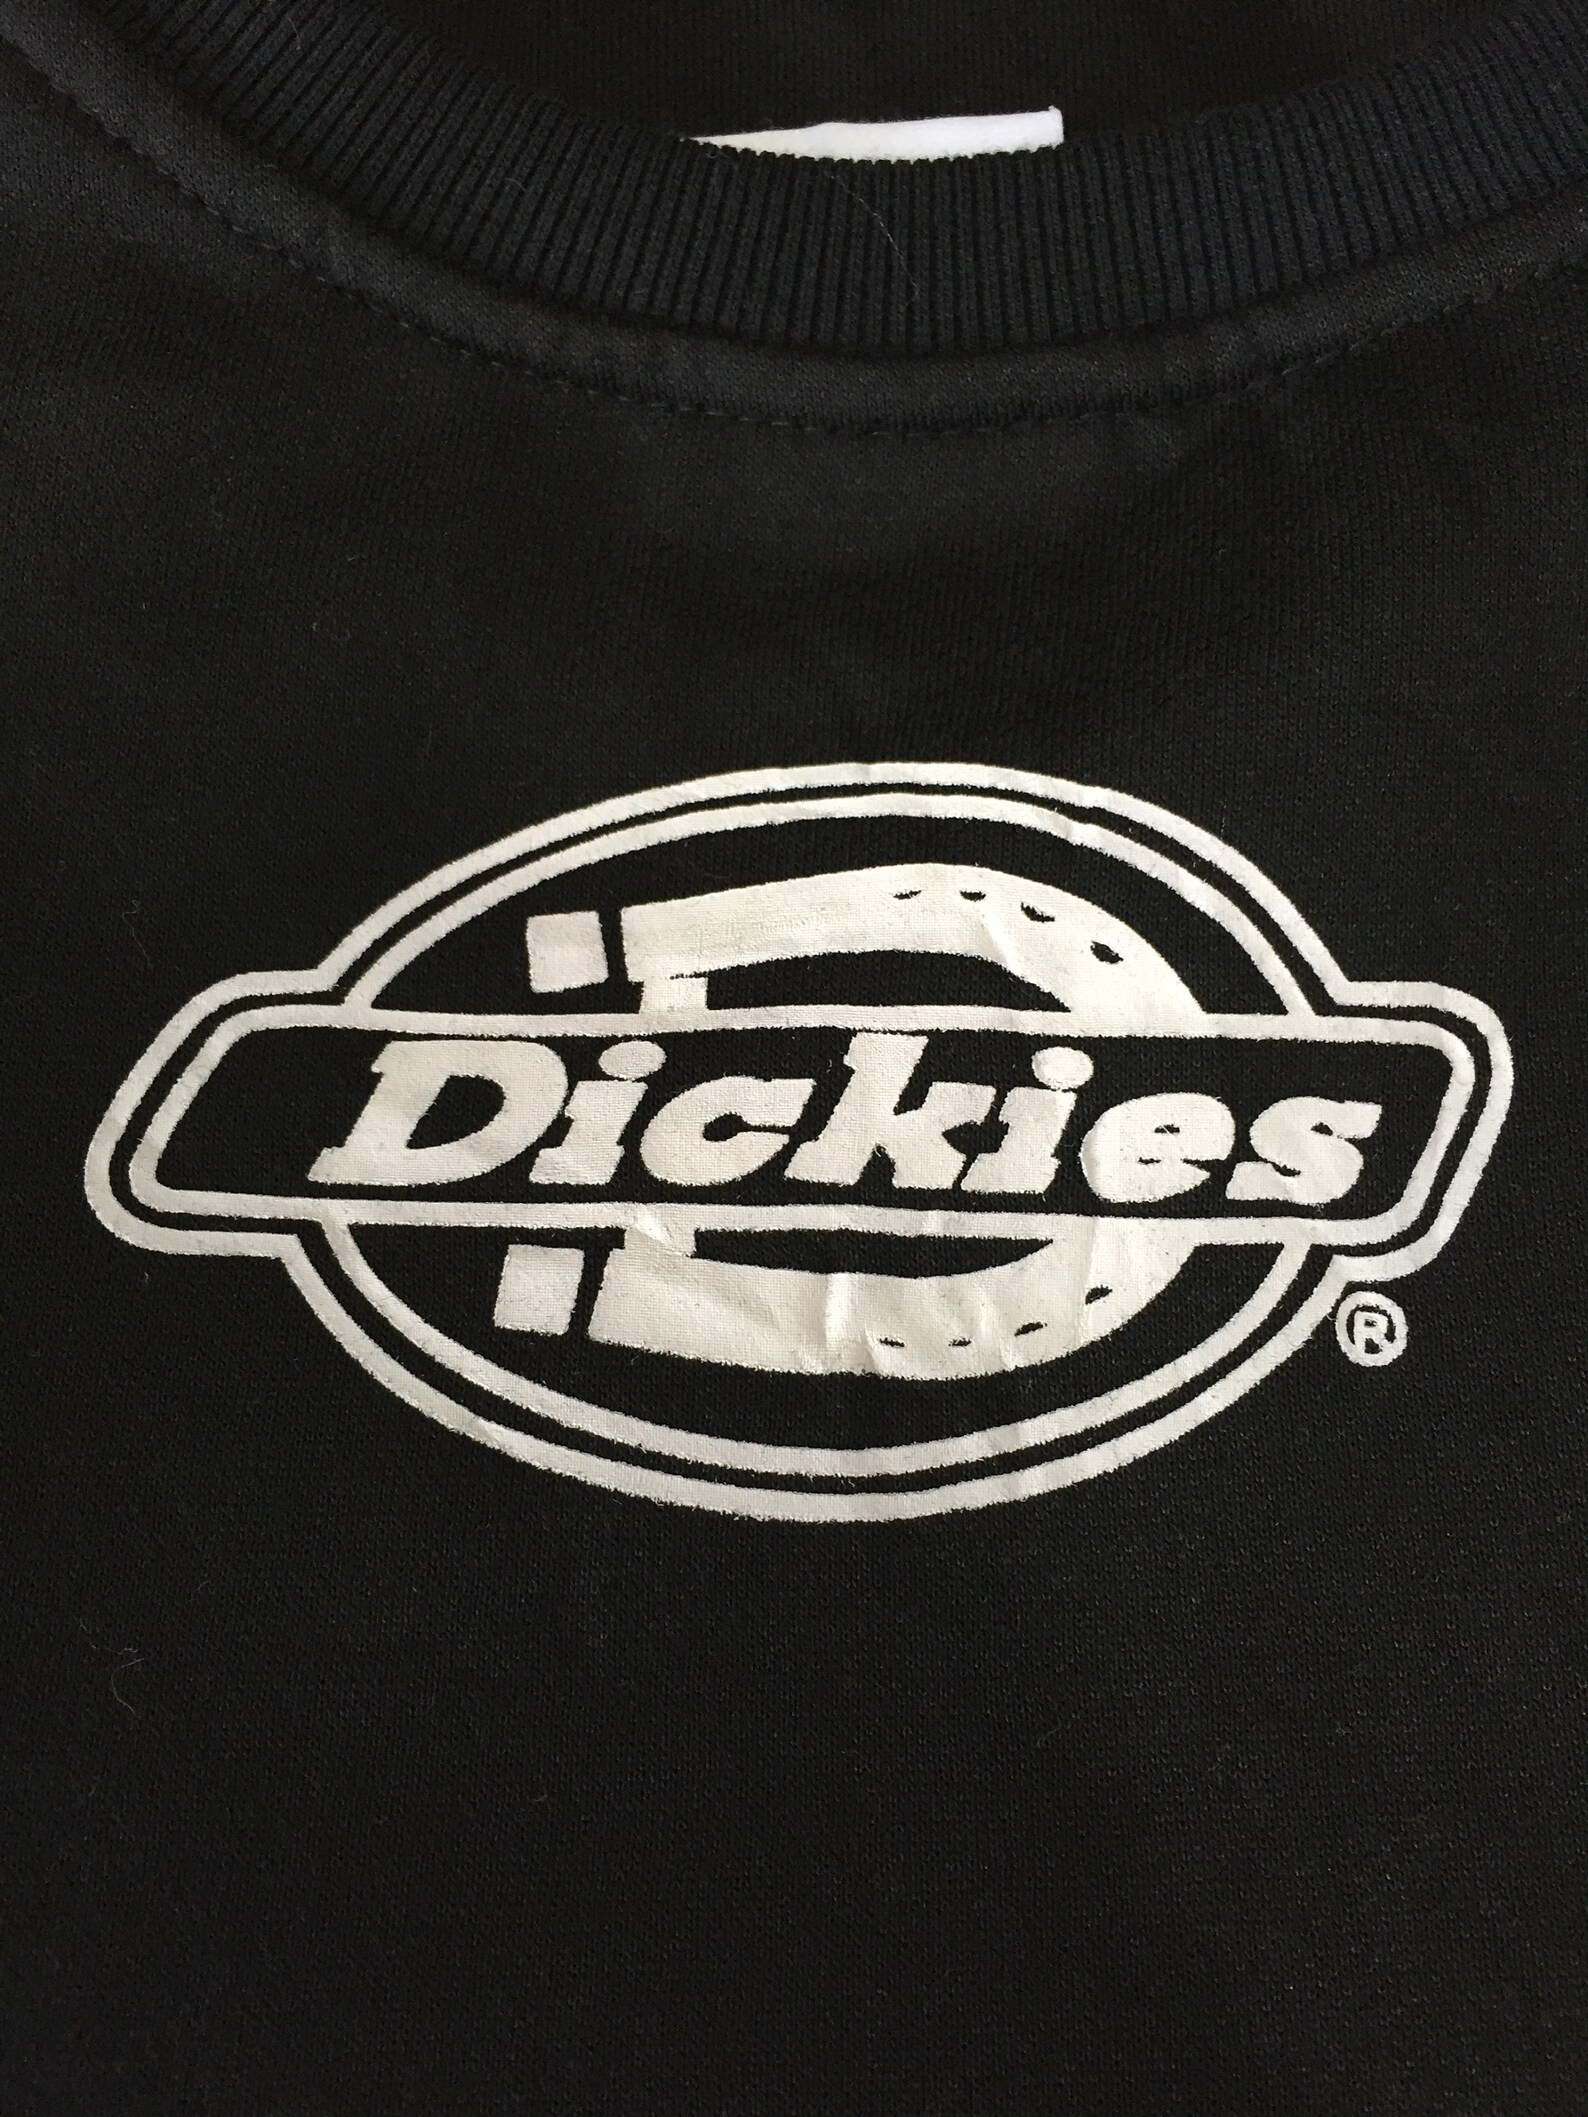 Thrasher x Dickies fire style big logo Skateboard codeLY | Etsy